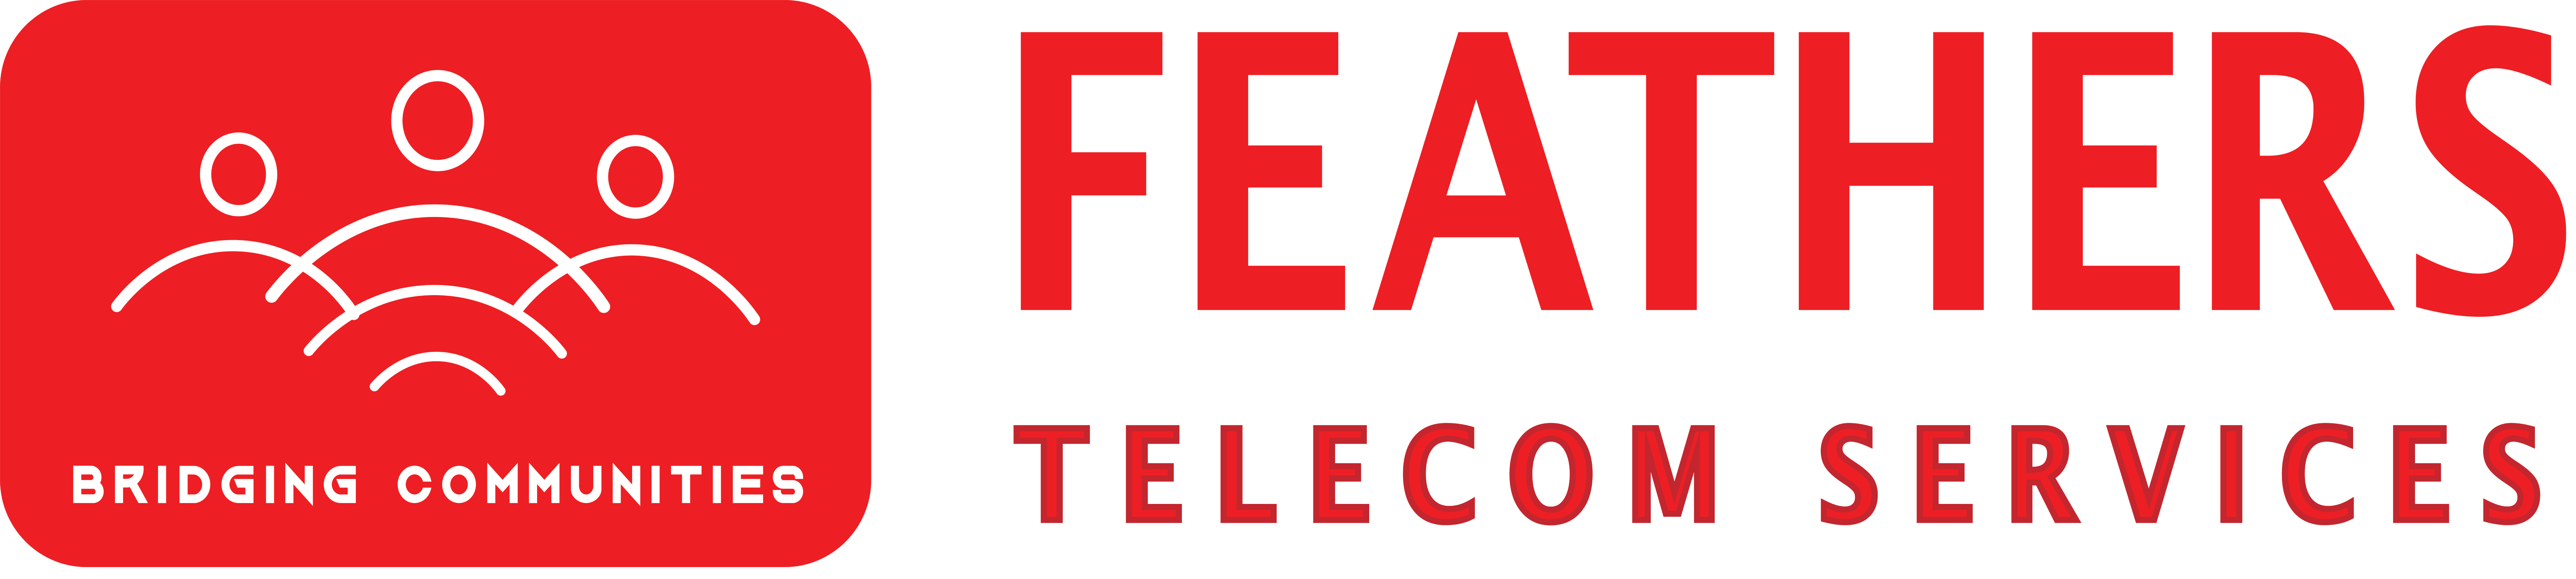 Feathers Telecom Services Pvt Ltd